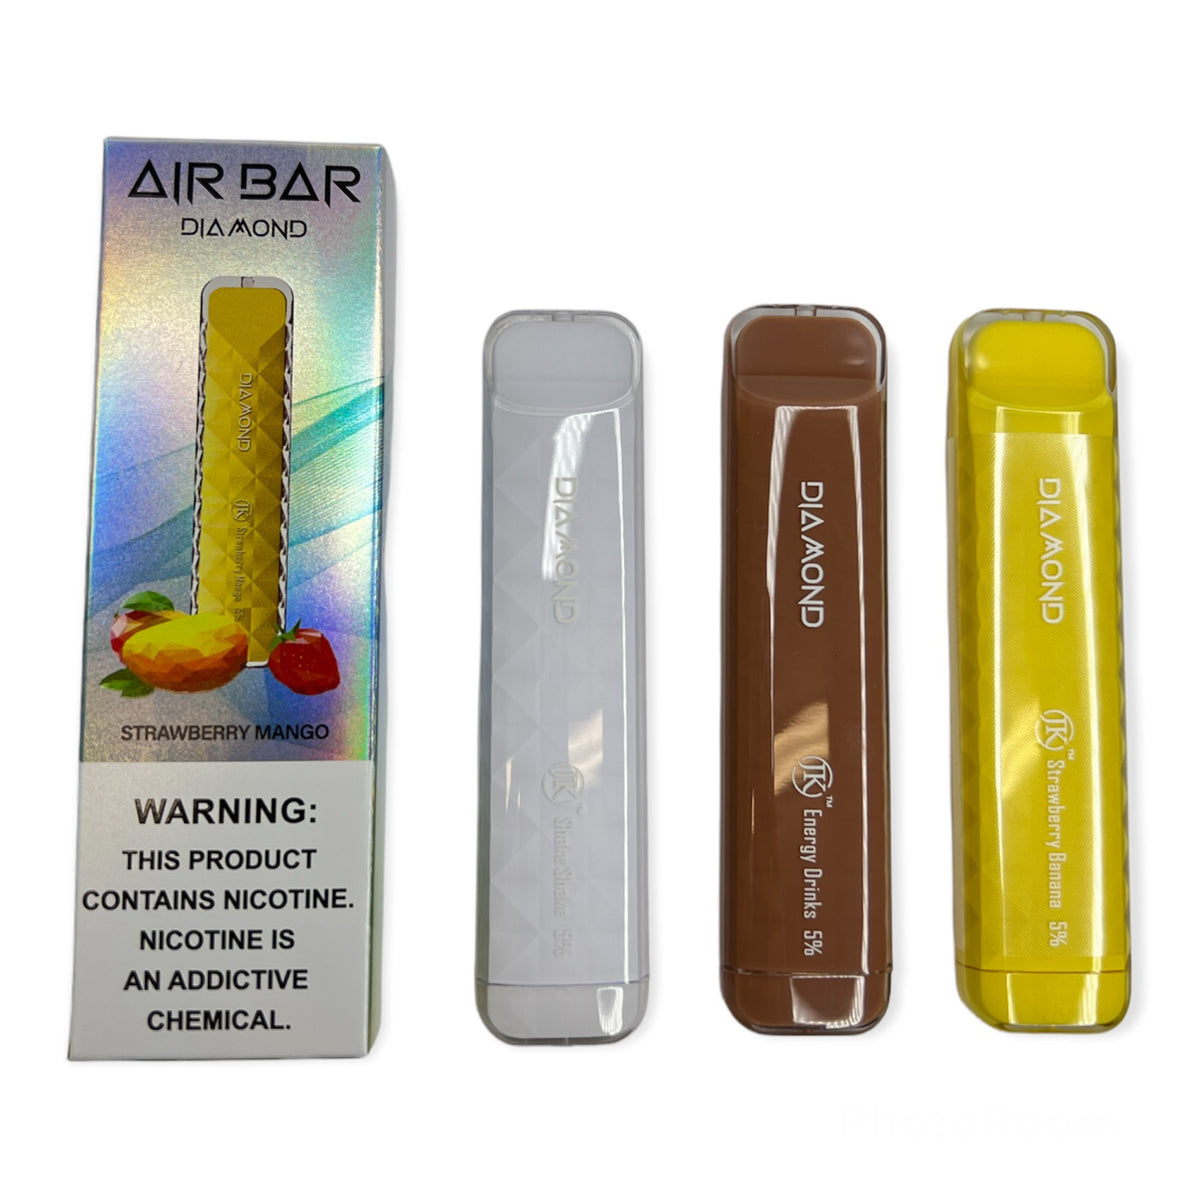 Air Bar Diamond flavors - Golden Leaf Shop